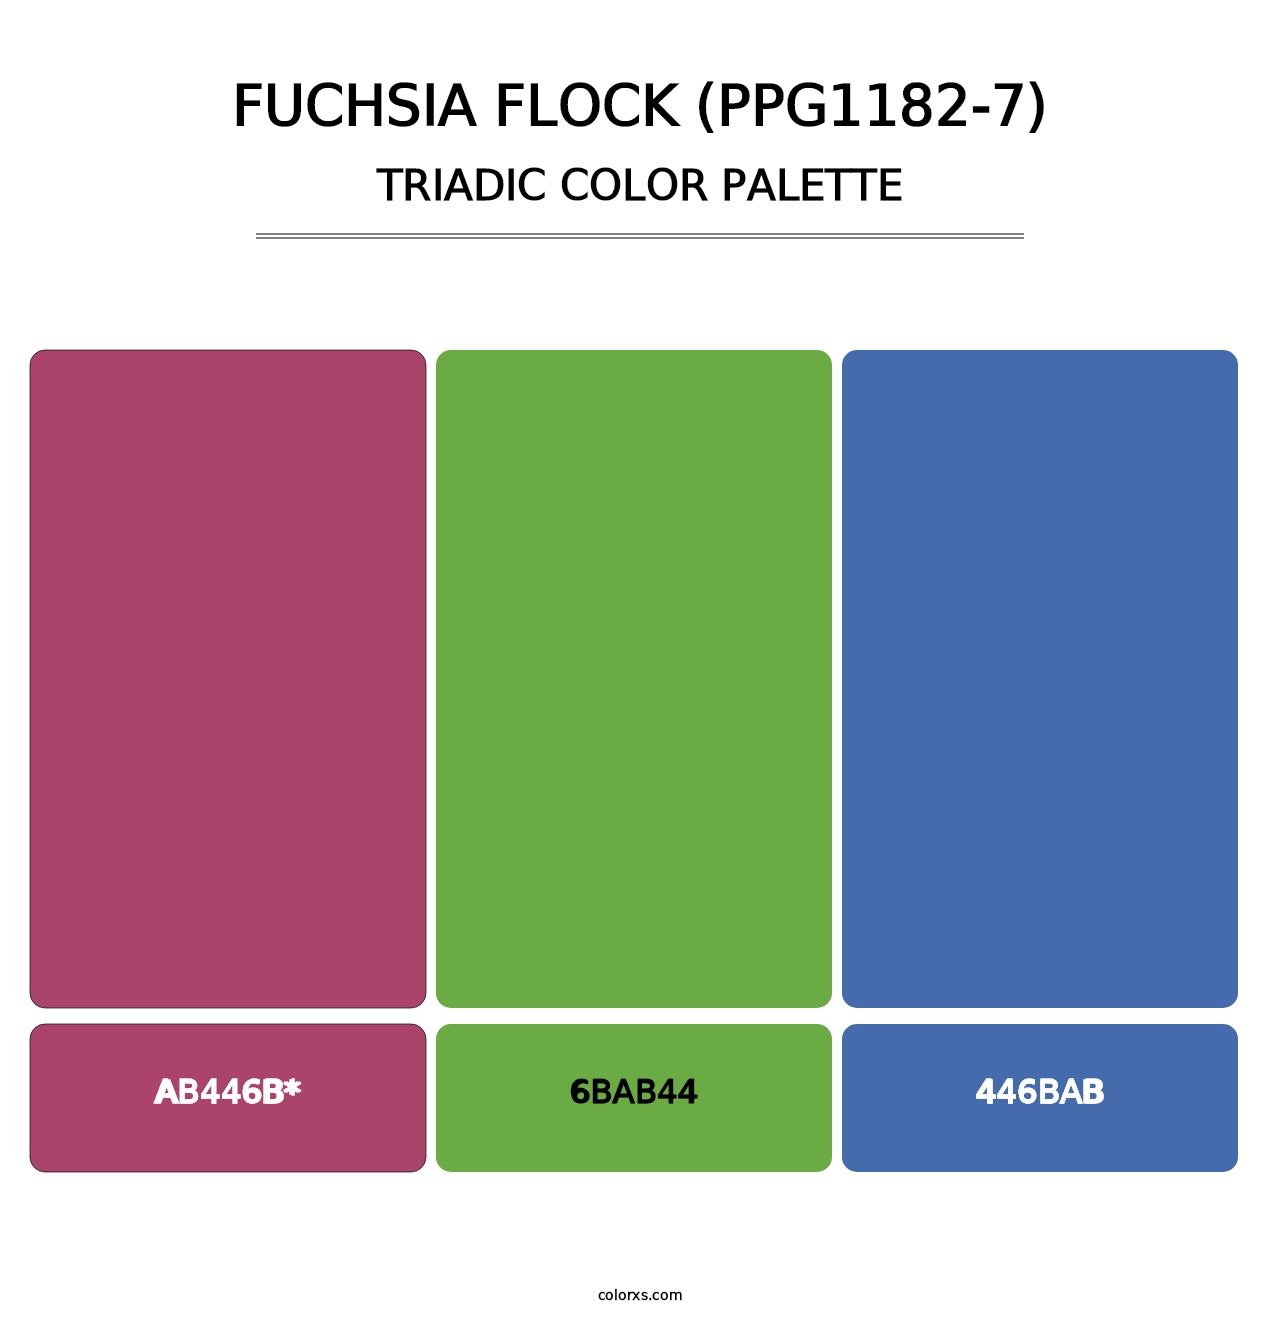 Fuchsia Flock (PPG1182-7) - Triadic Color Palette